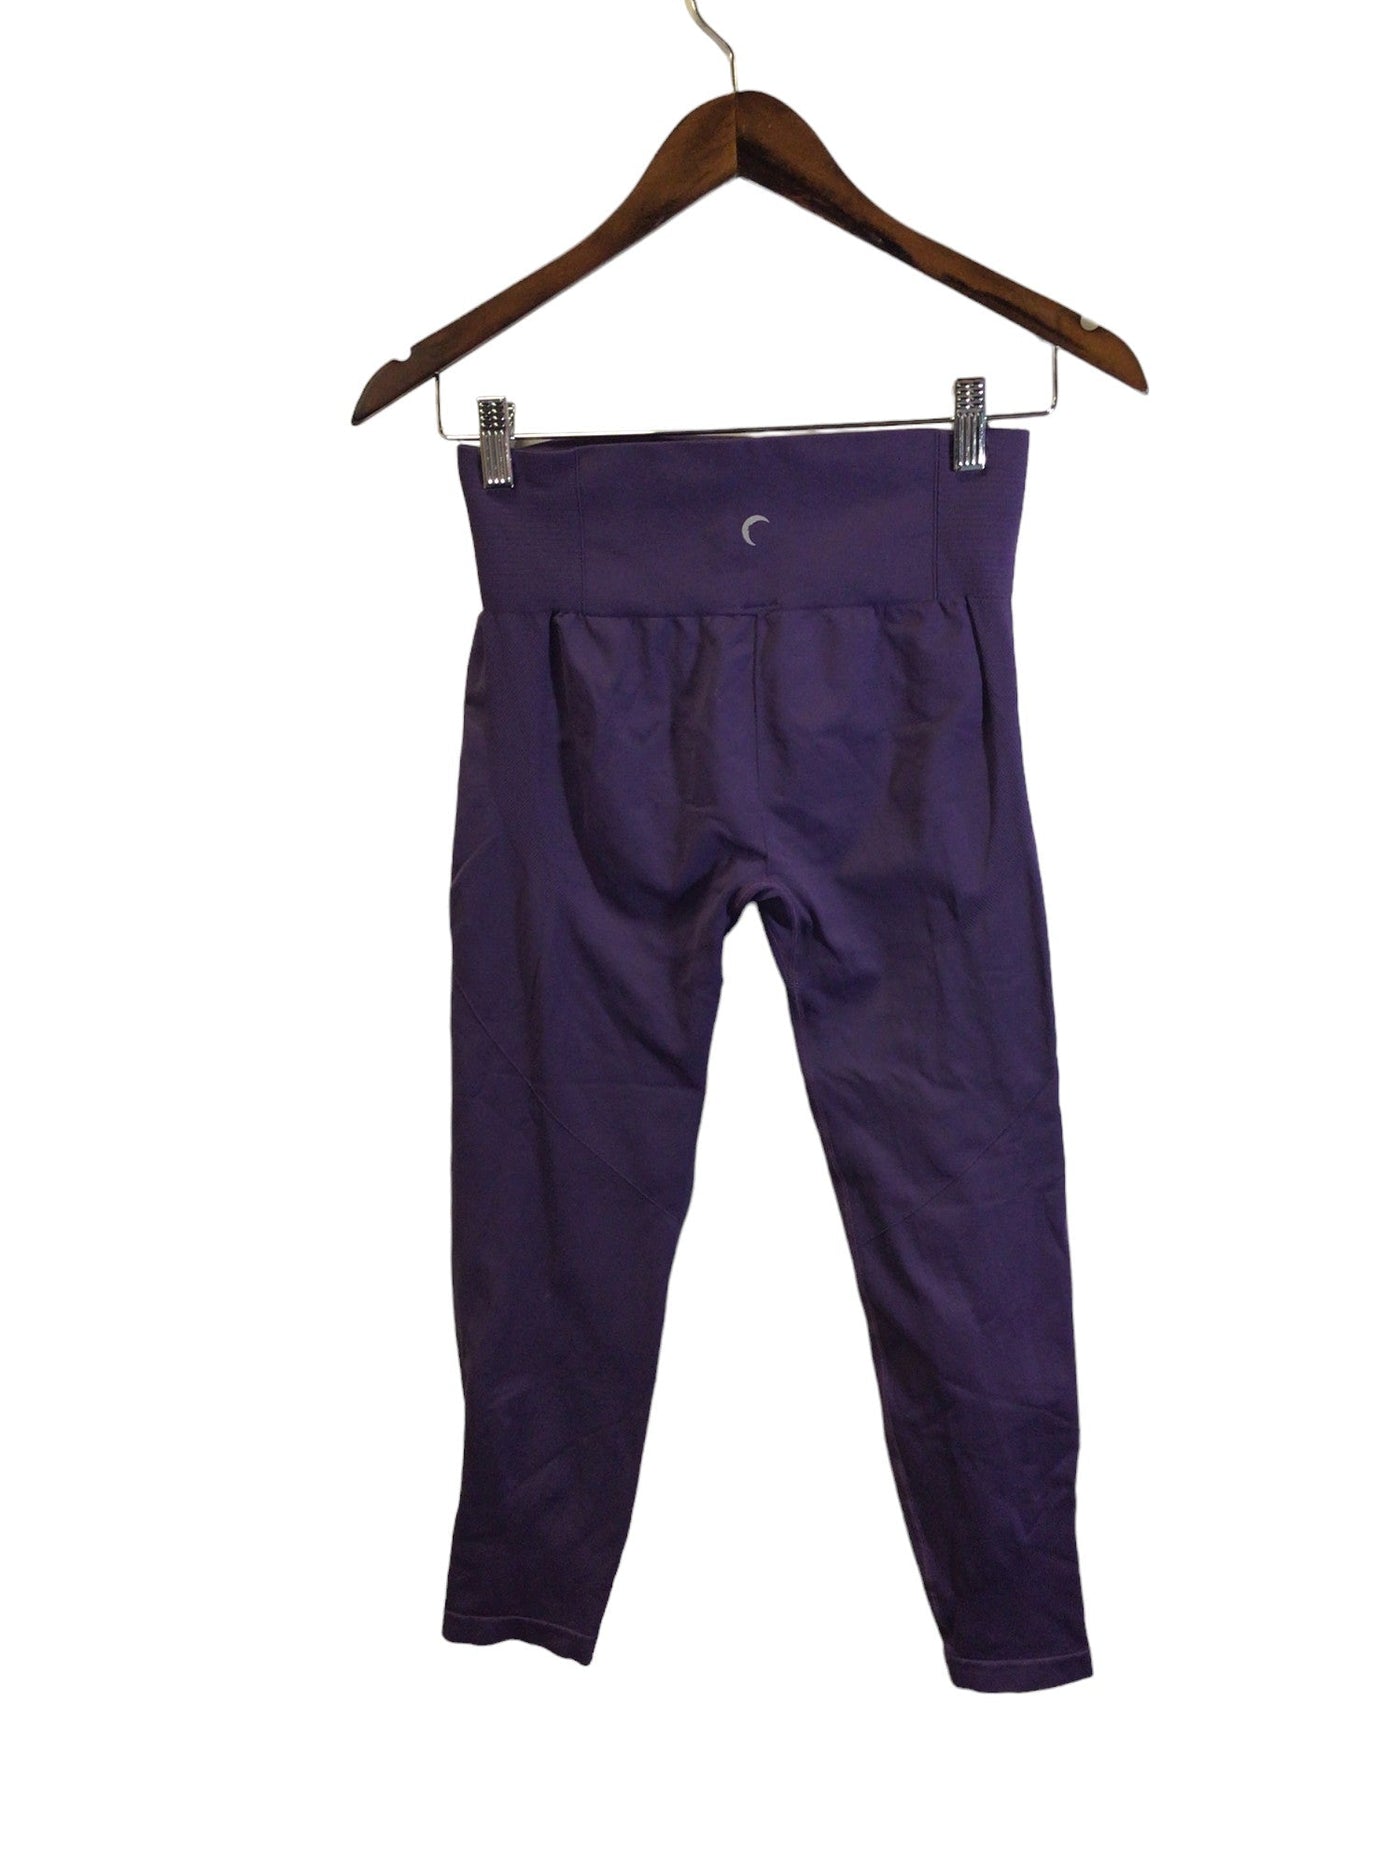 UNBRANDED Women Activewear Leggings Regular fit in Purple - Size XS | 9.99 $ KOOP